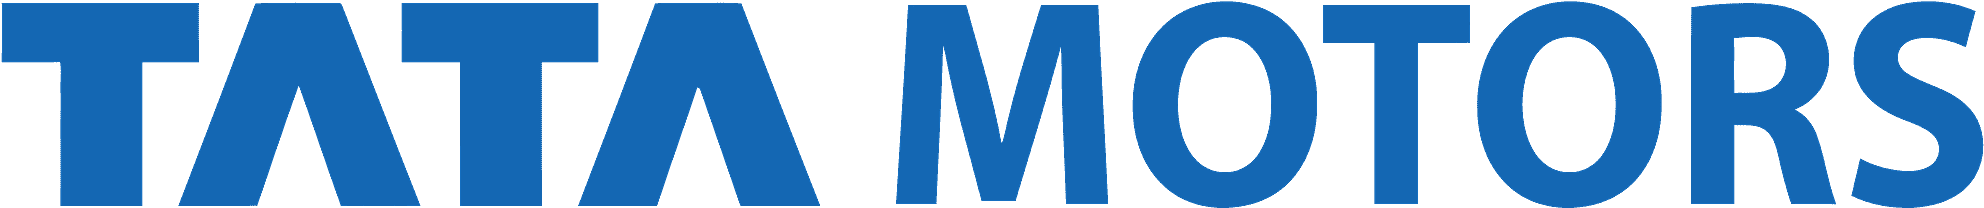 Tata Motors Logo Blue